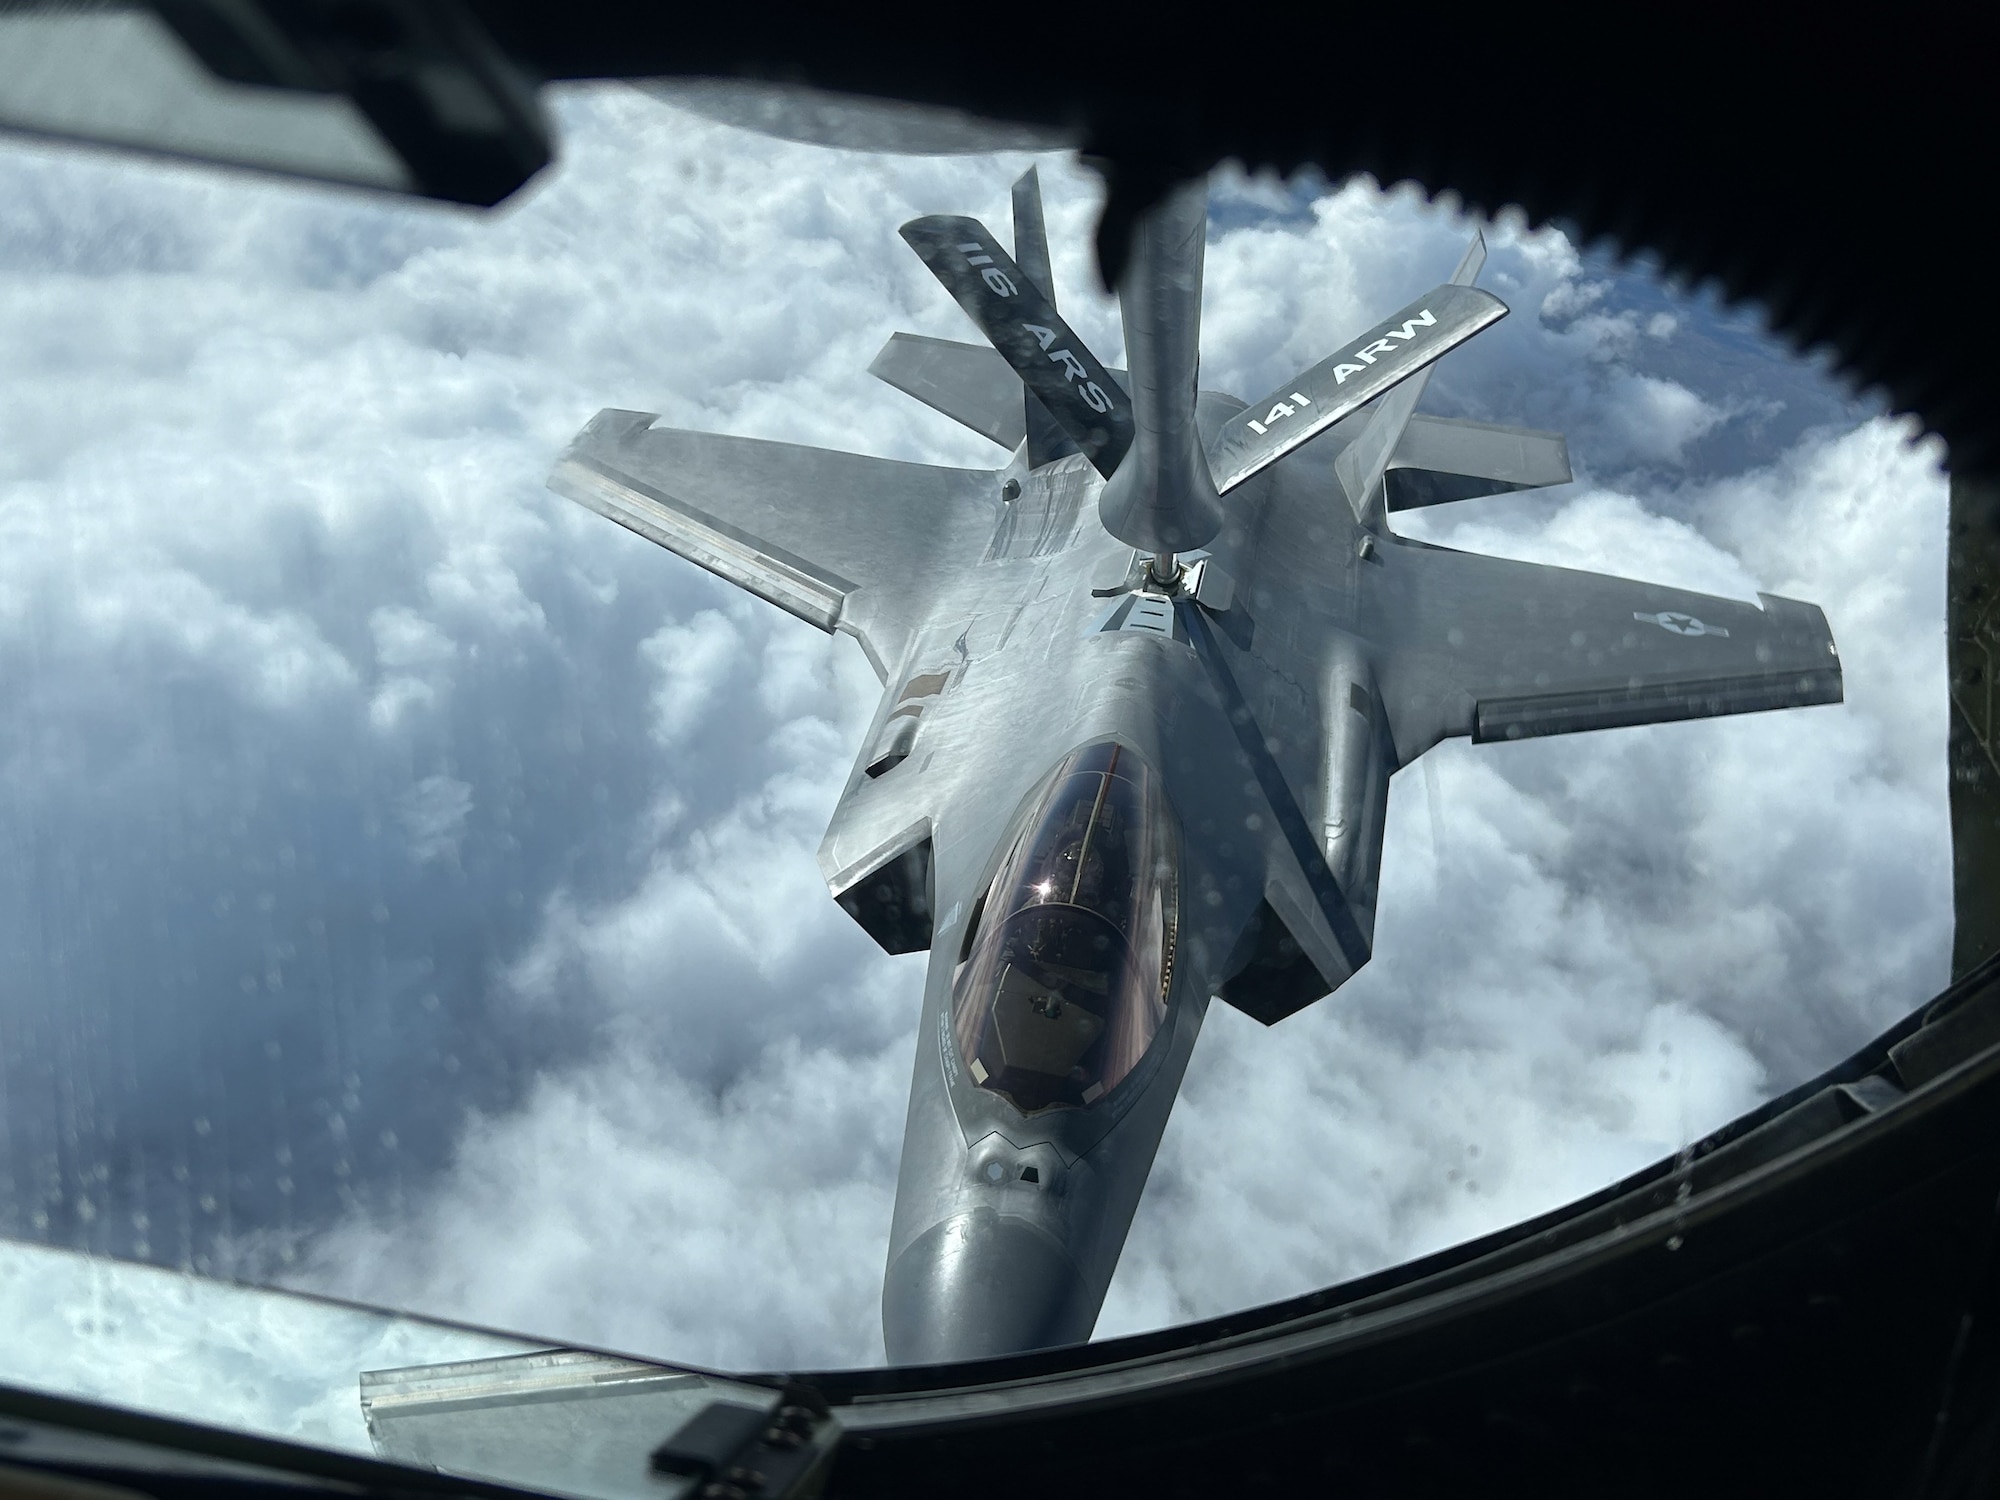 F-35 refueling